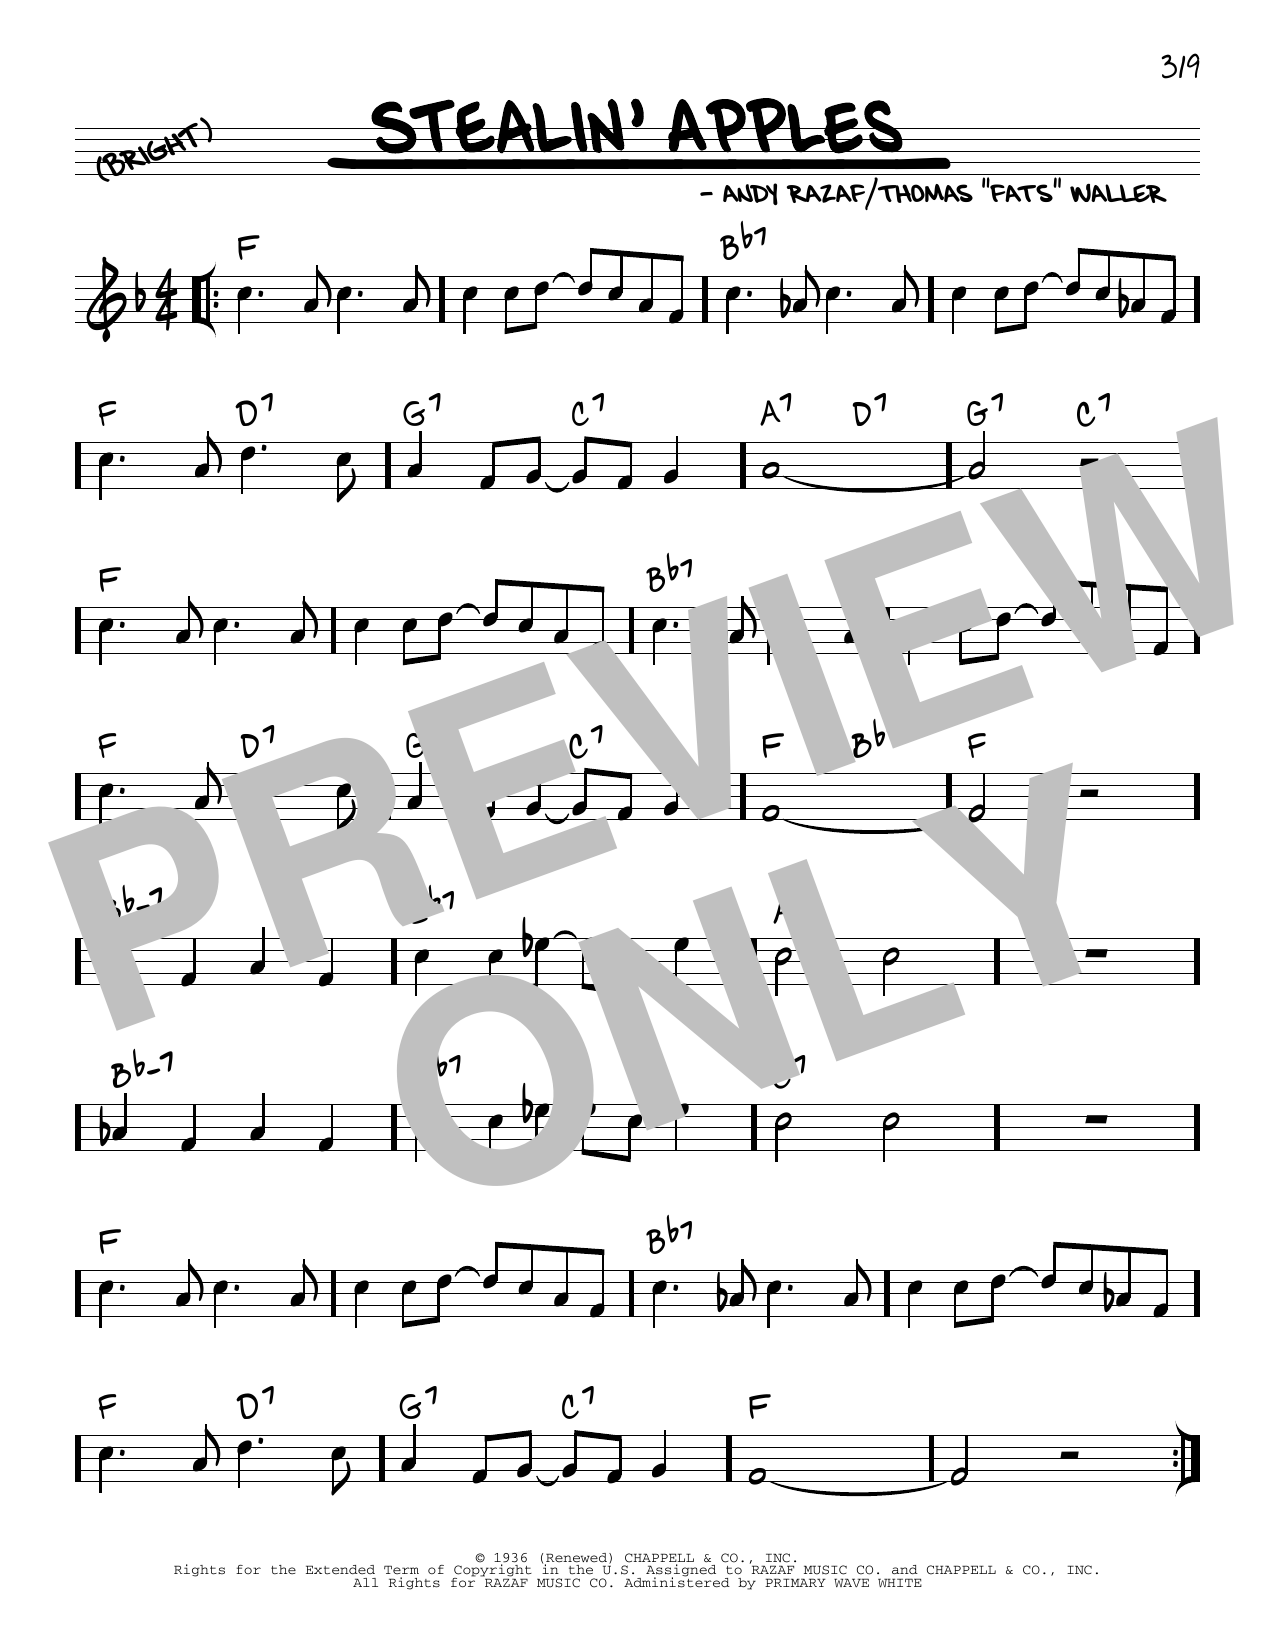 Benny Goodman Stealin' Apples (arr. Robert Rawlins) Sheet Music Notes & Chords for Real Book – Melody, Lyrics & Chords - Download or Print PDF